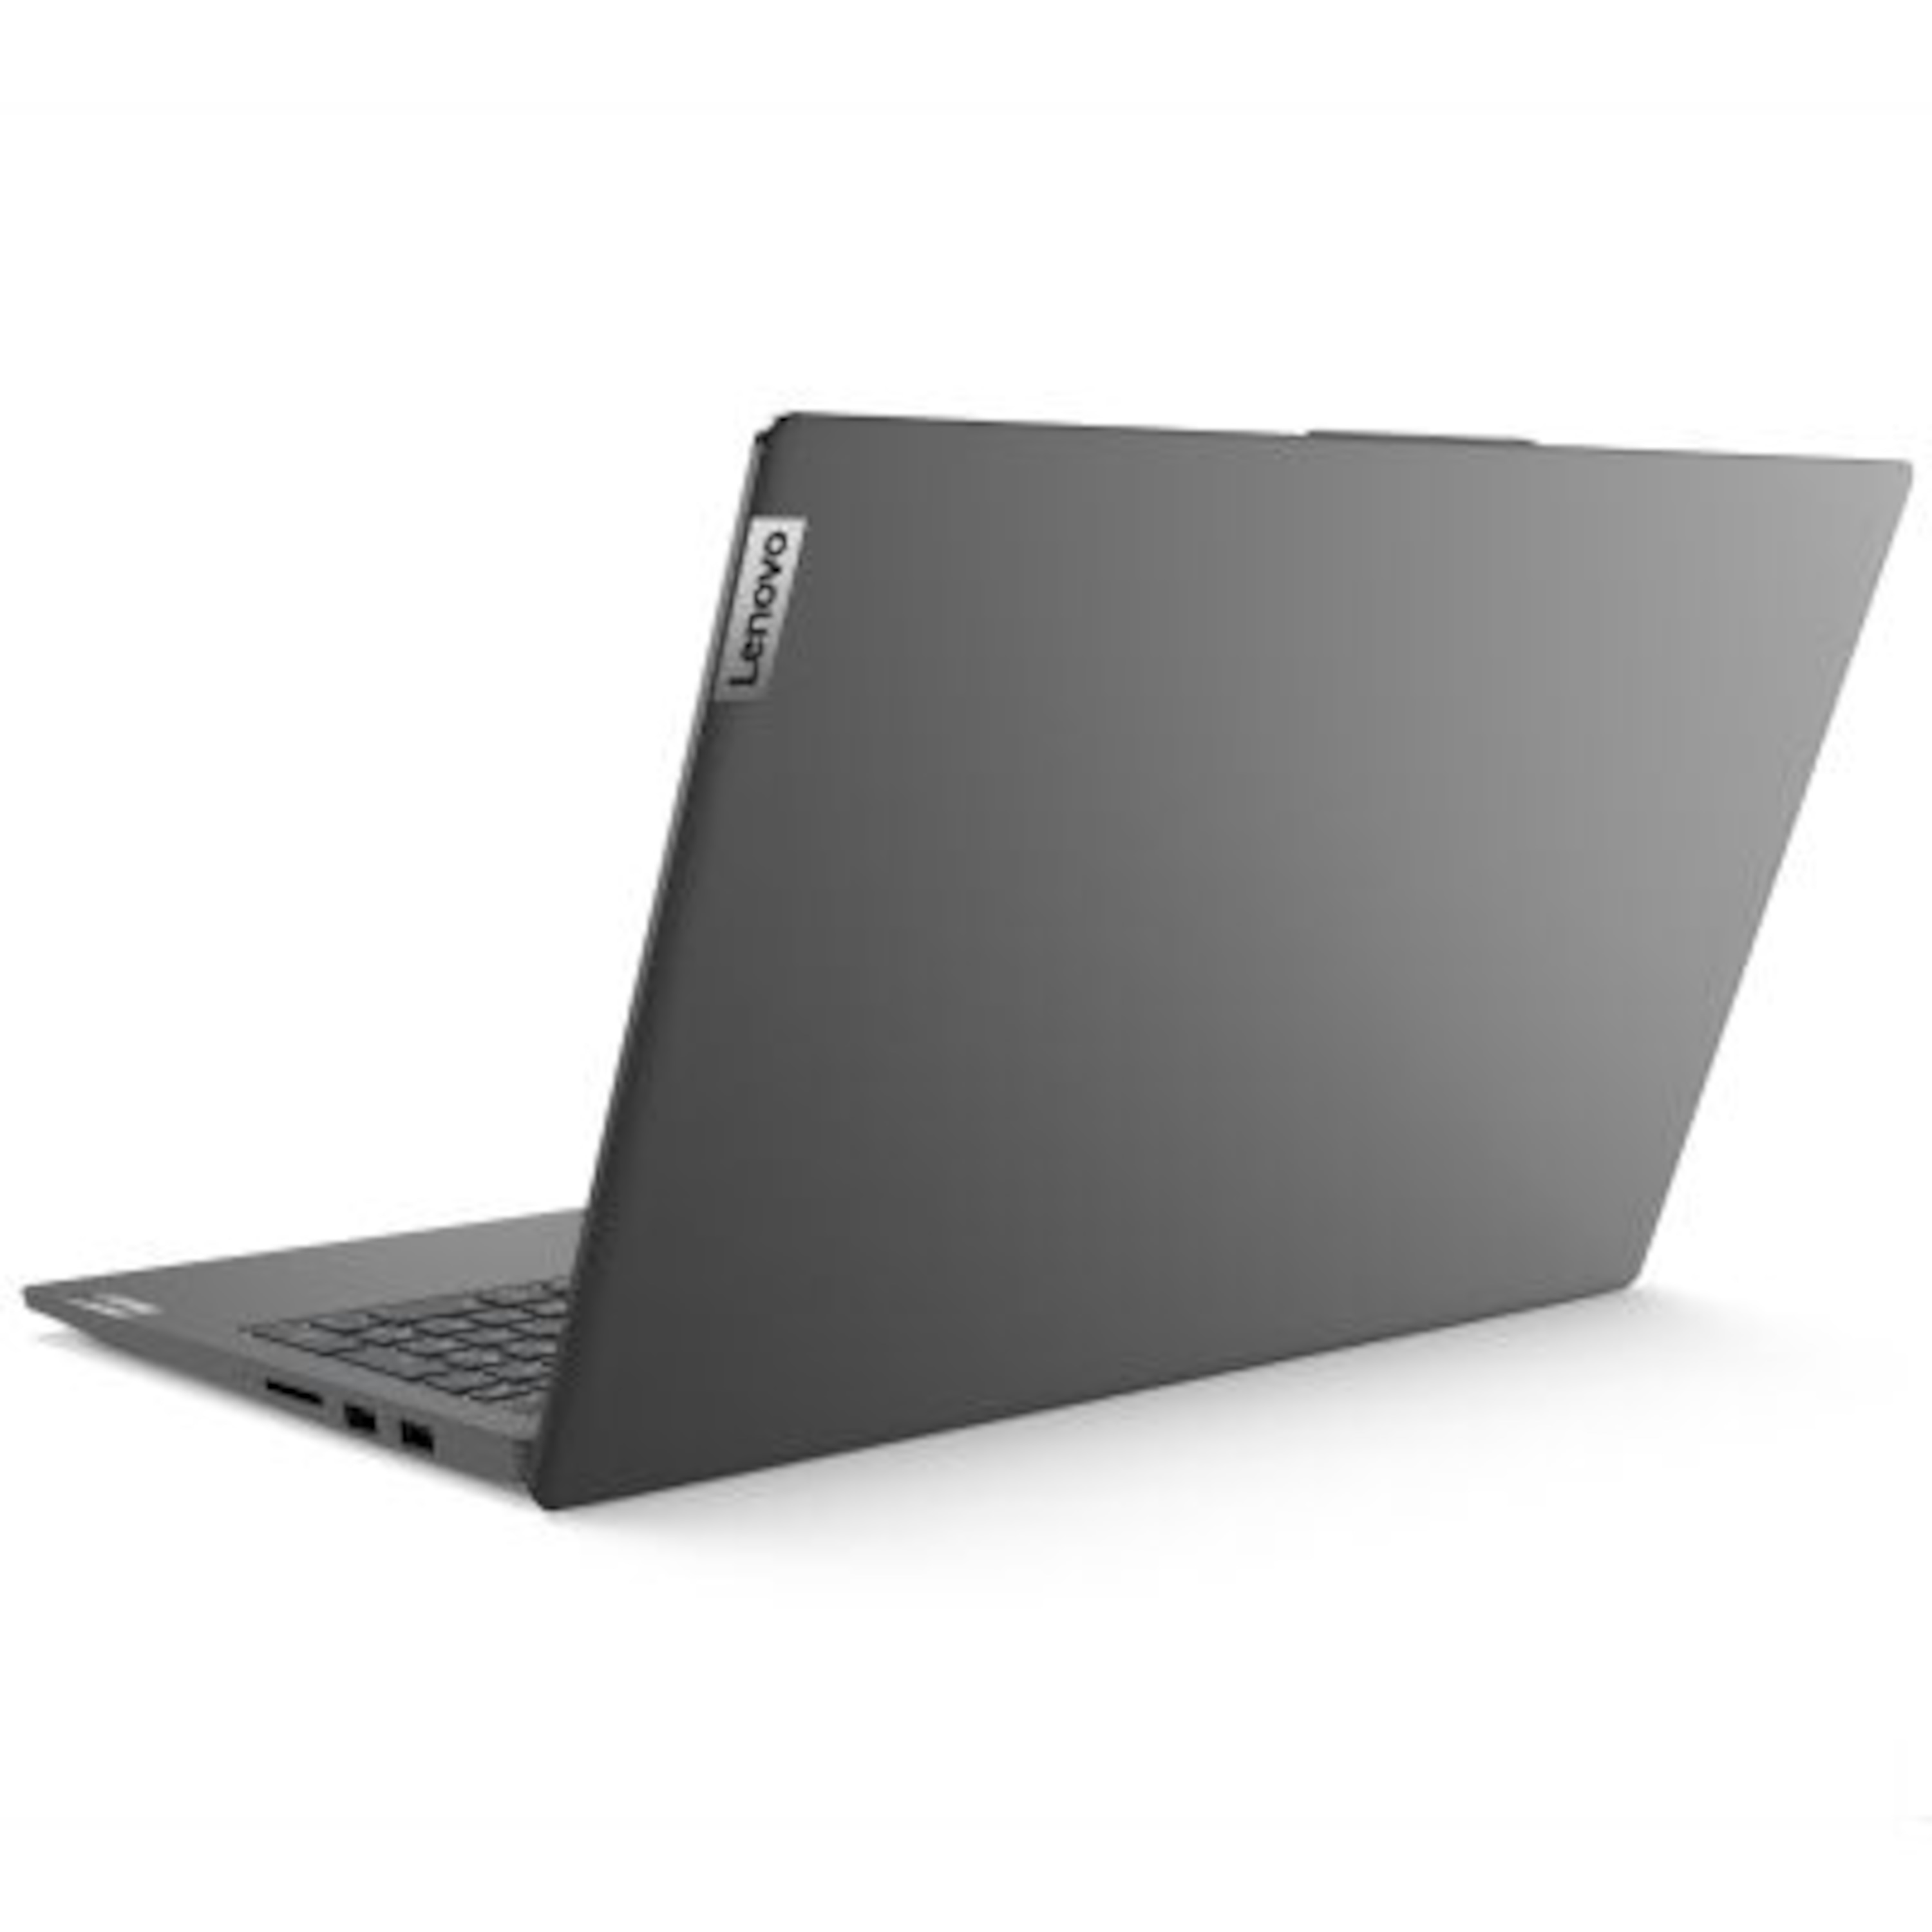 LENOVO IdeaPad™ 5 15AIIL05, Intel® Core™ i7-1065G7, Windows 10 Home, 39,6 cm (15,6") FHD Display, MX350, 1 TB PCIe SSD, 16 GB RAM, Notebook